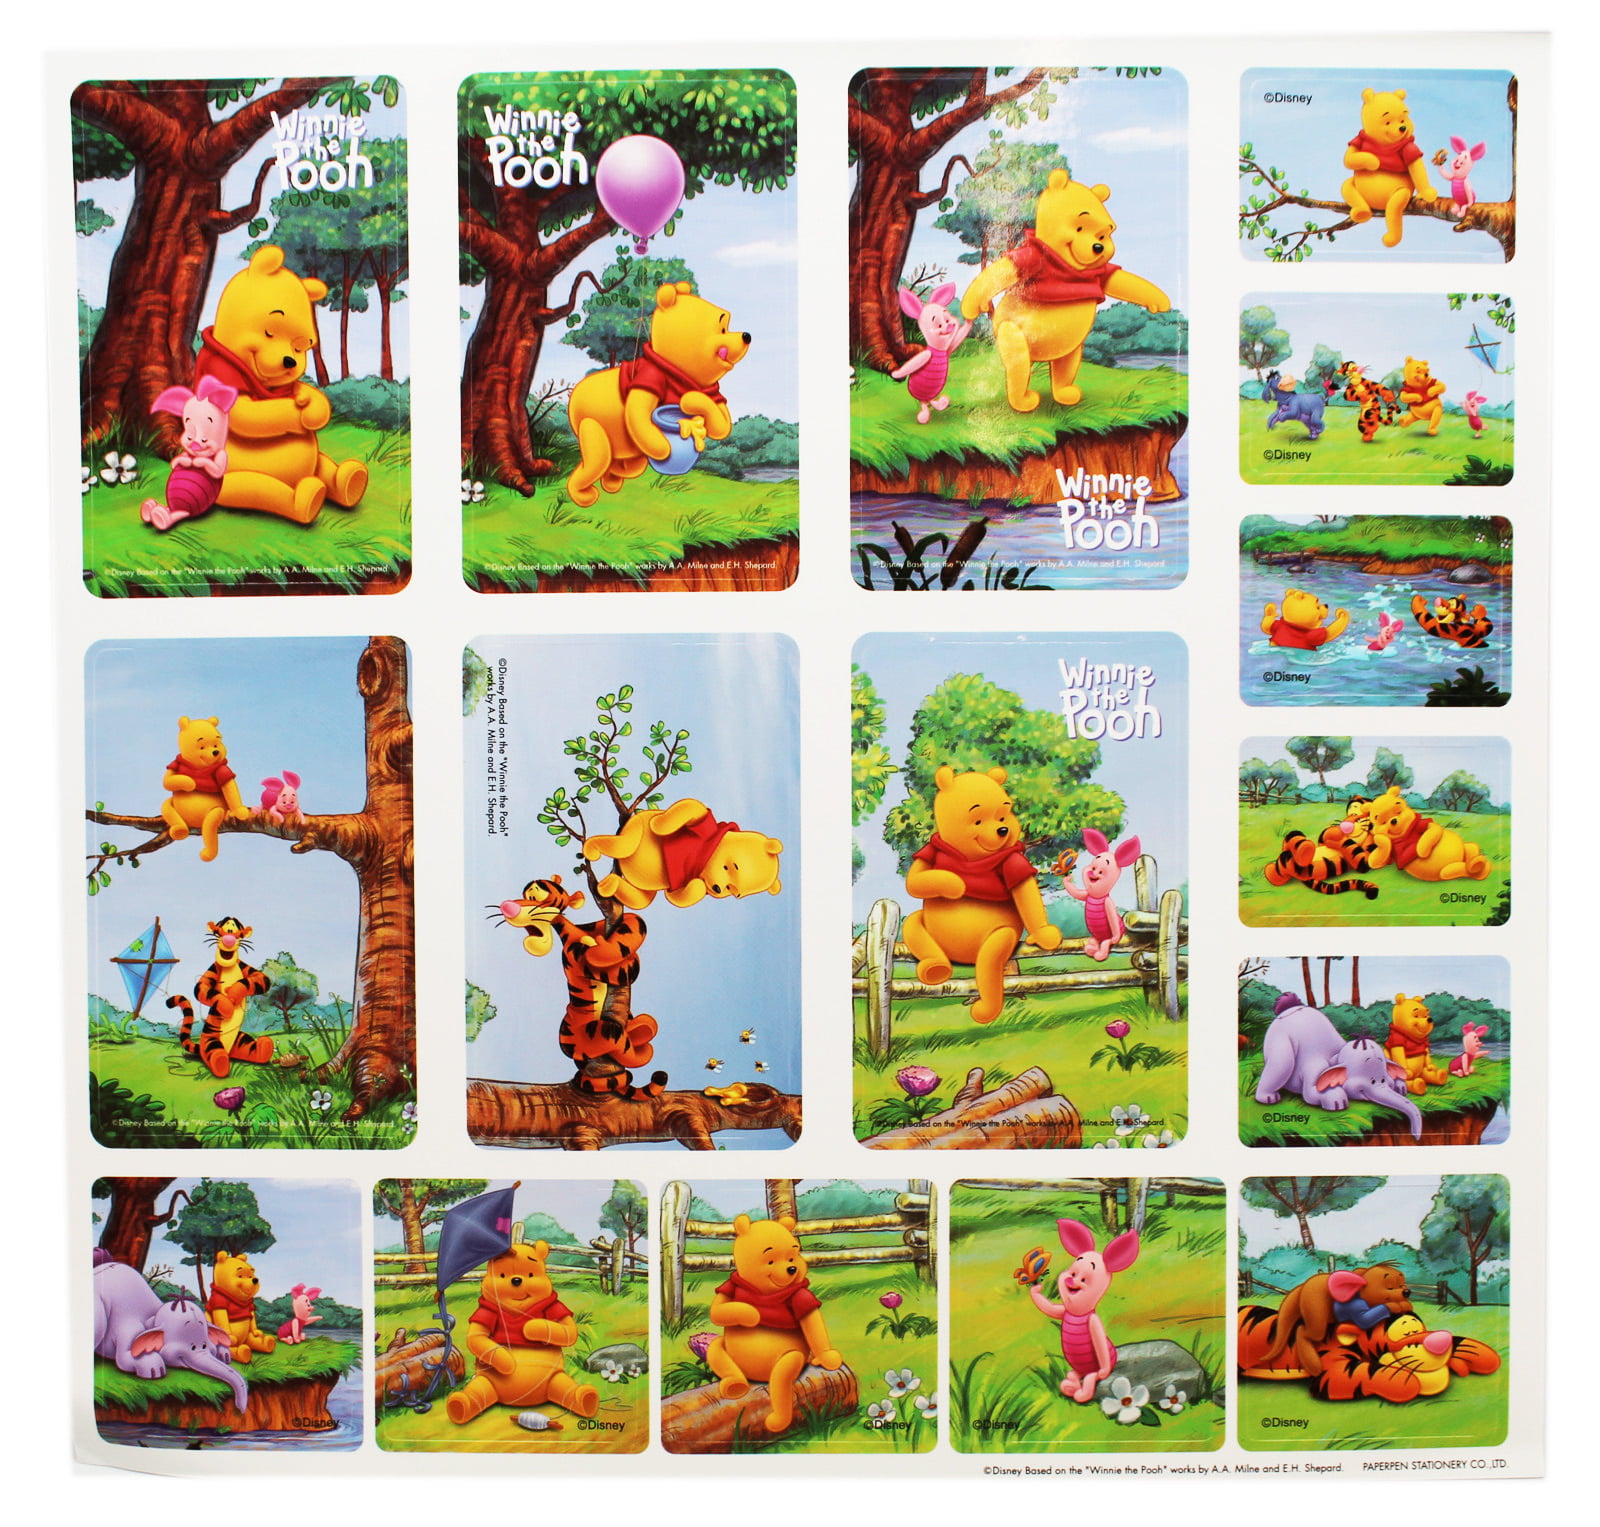 38 Stickers repositionnable Winnie l'Ourson Disney 102x46cm